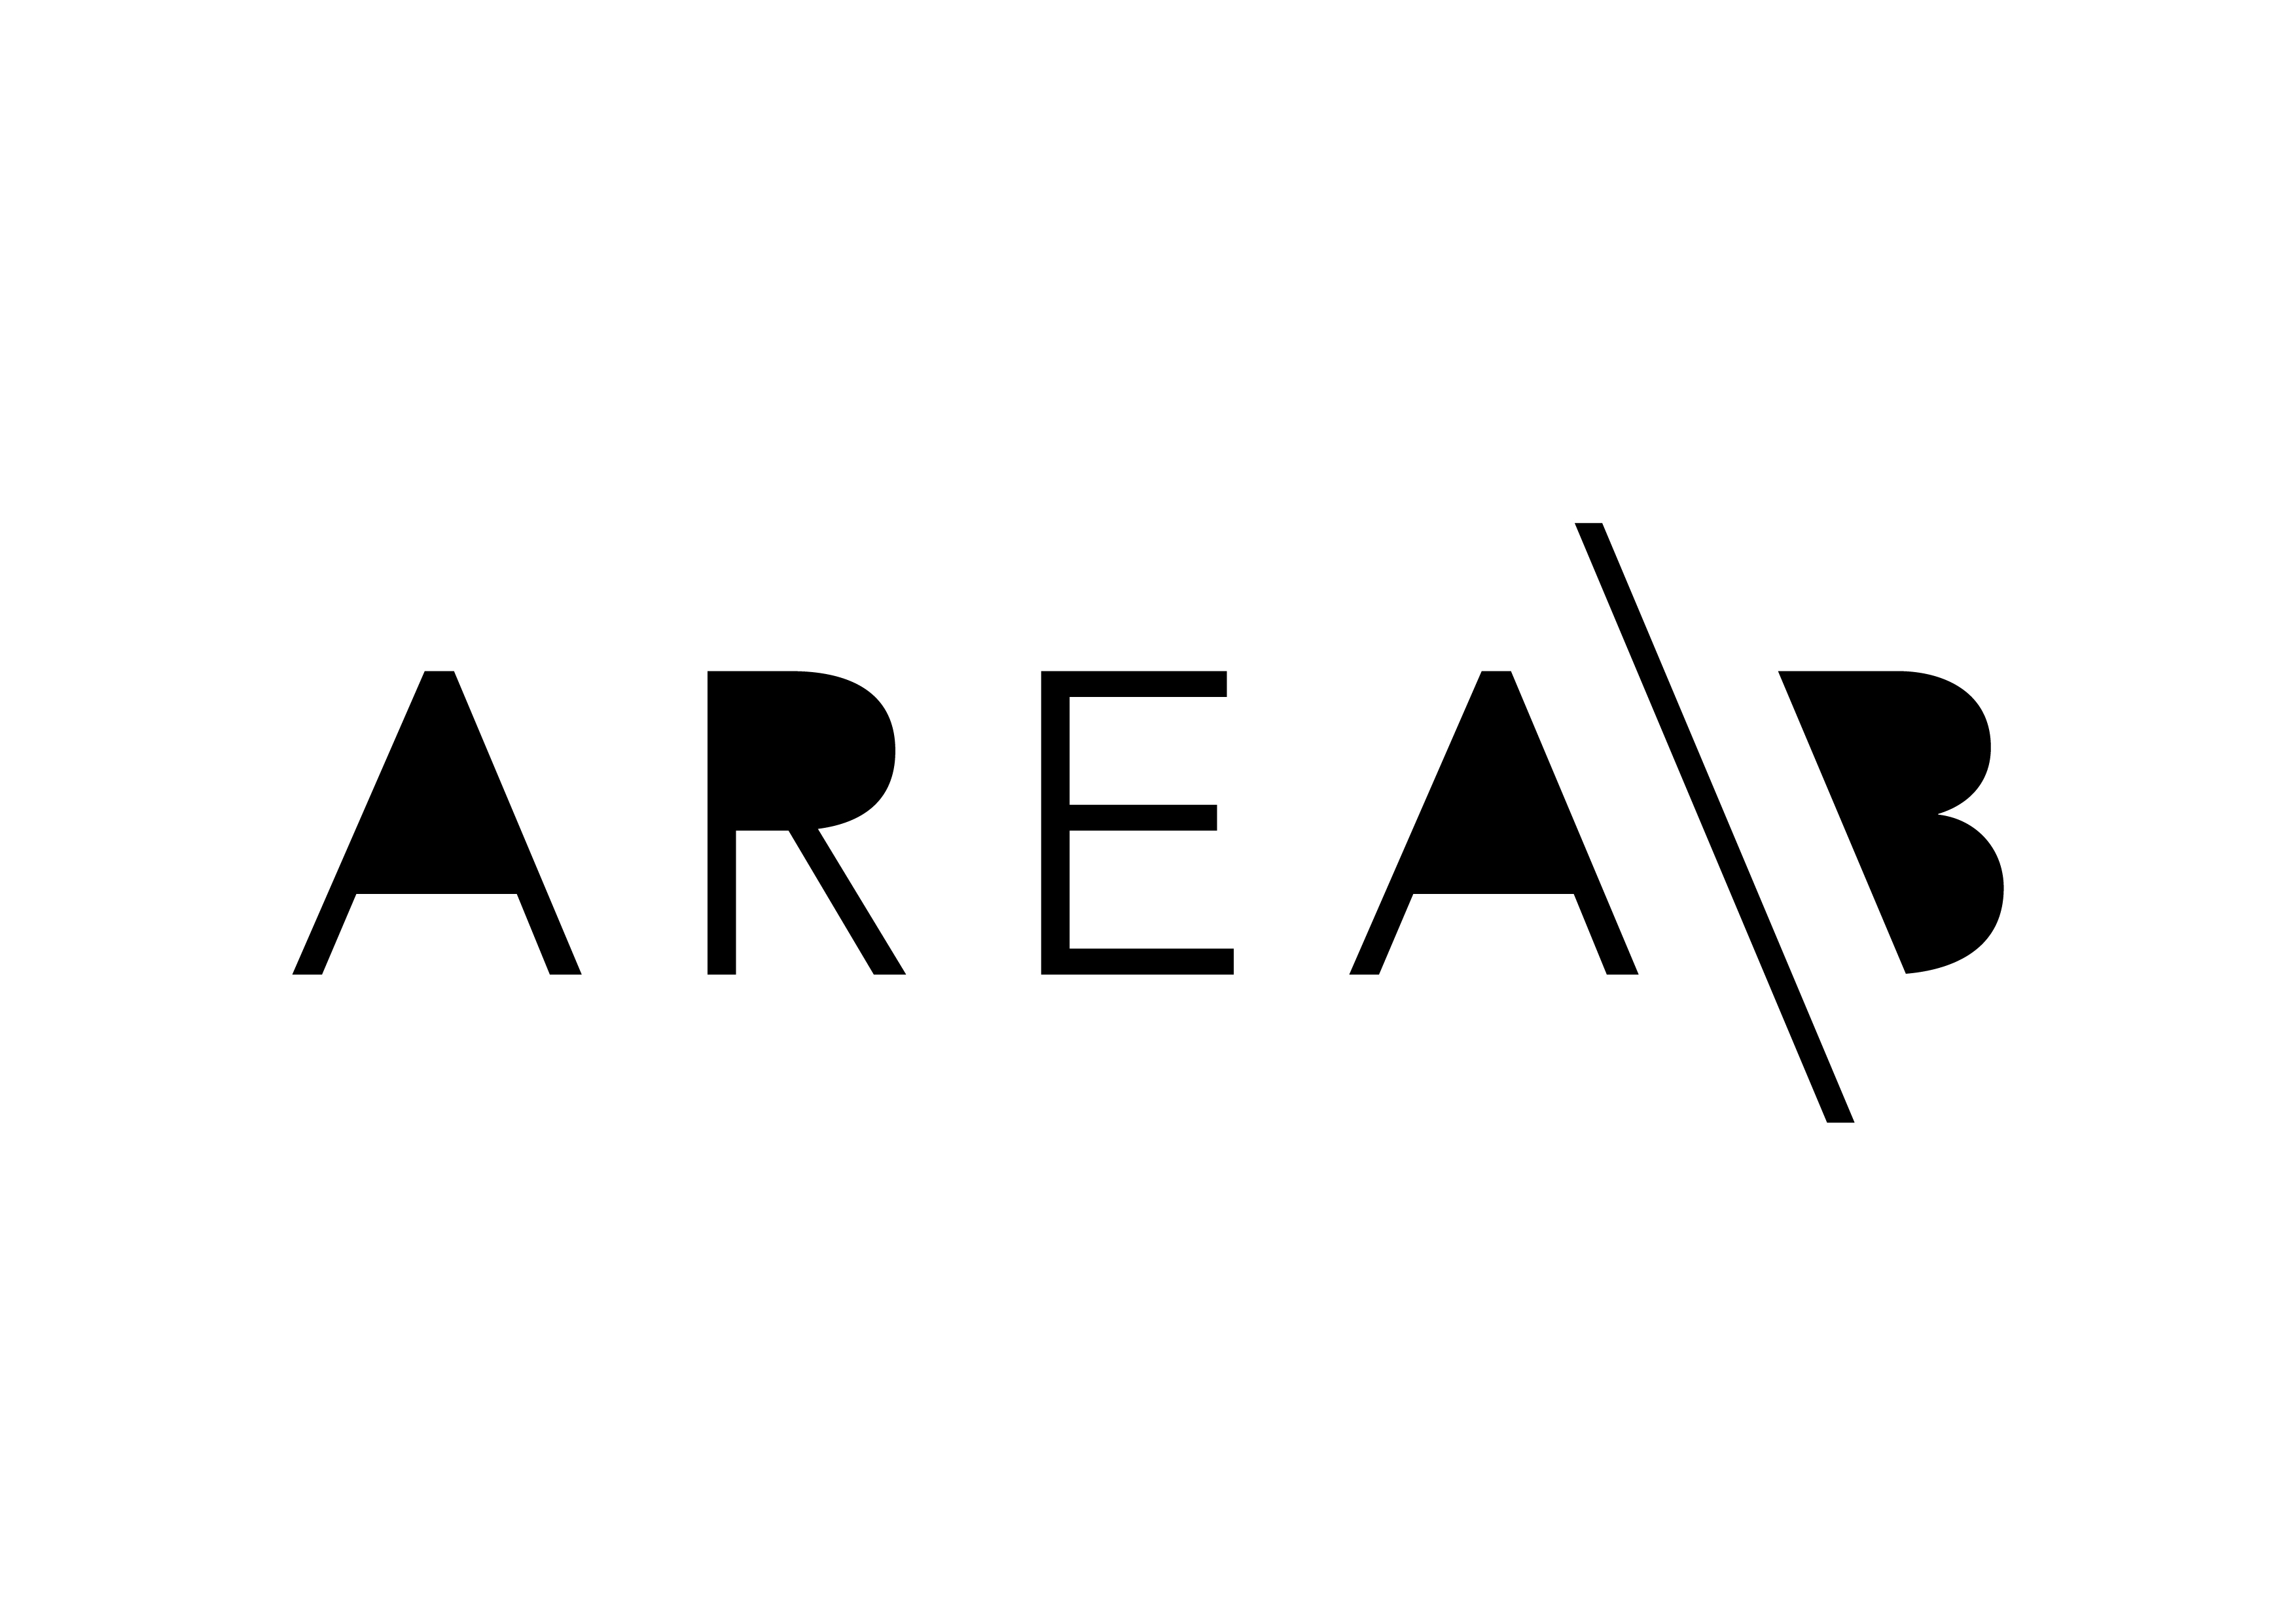 AreaB logo black